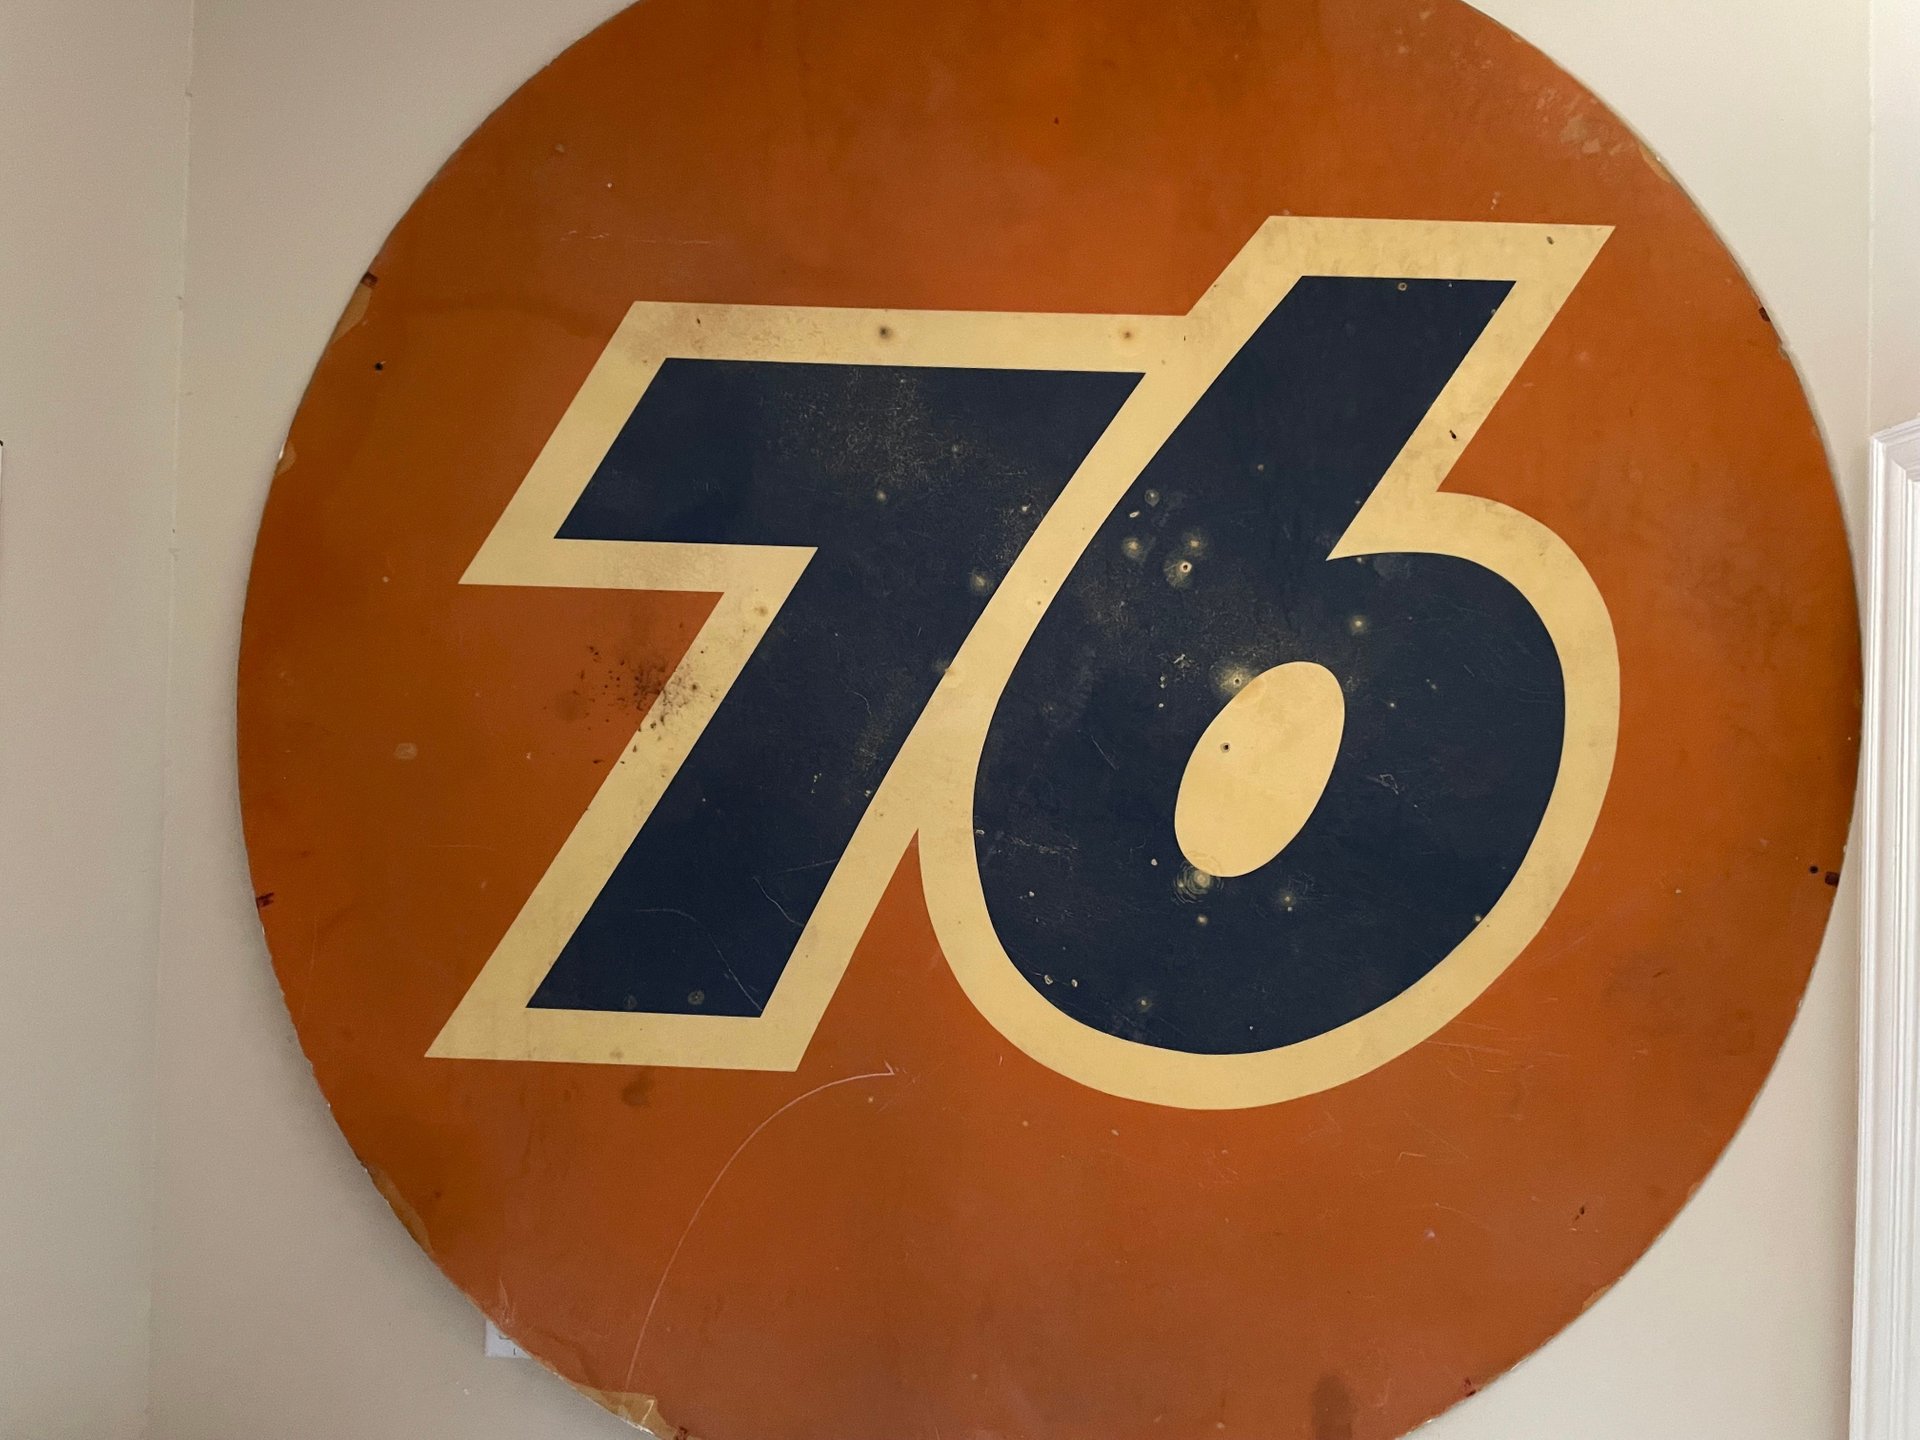 Union 76 fiberglass sign